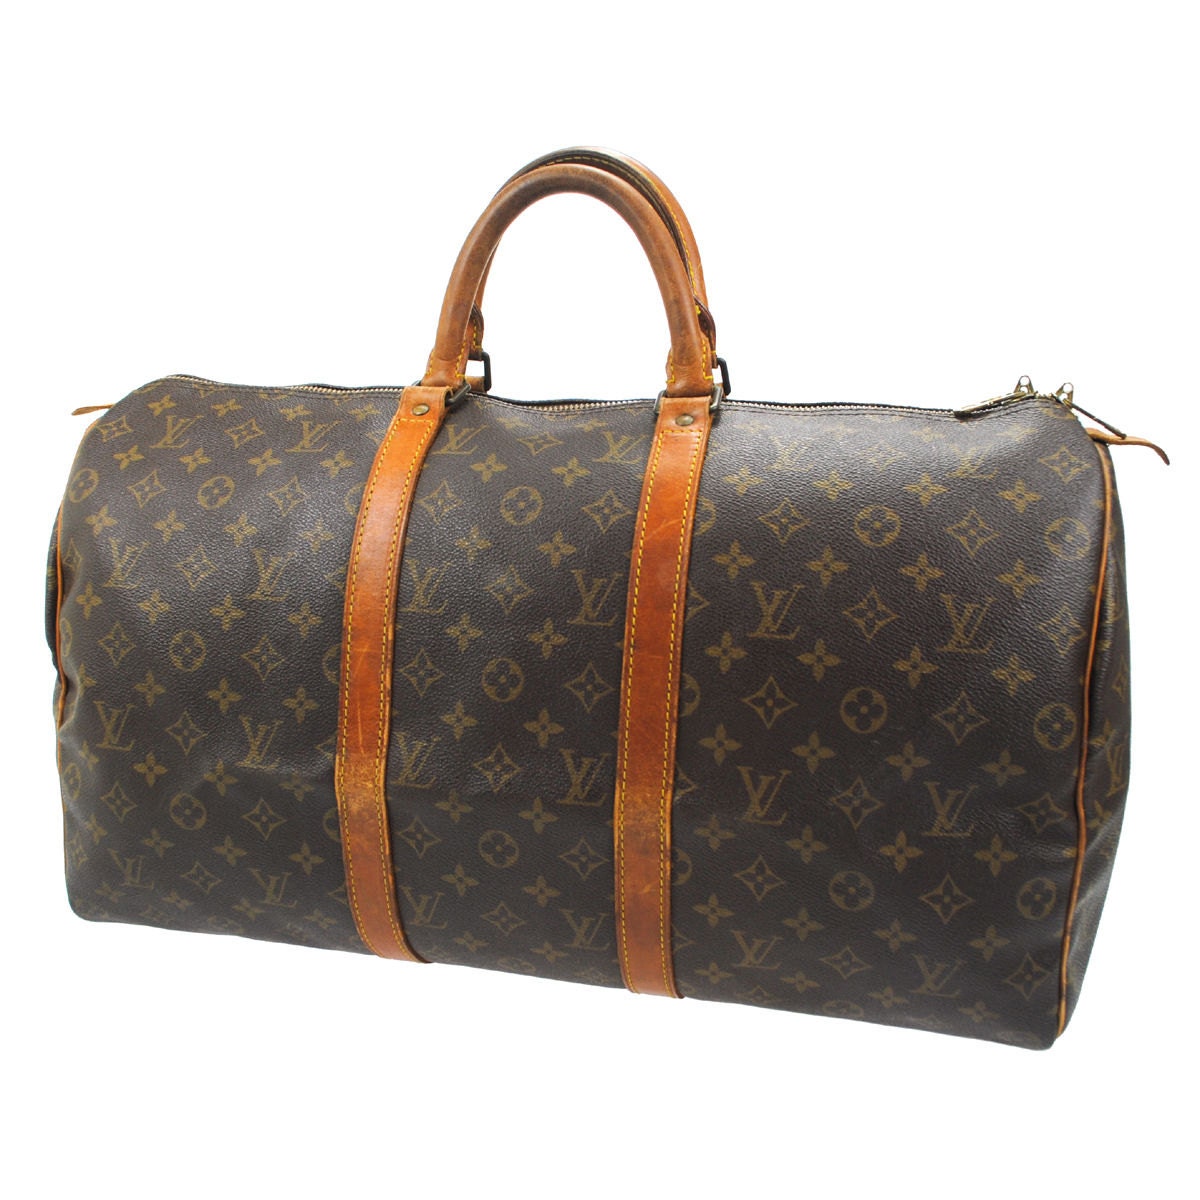 Authentic Louis Vuitton 50 Large Carry all Weekender Travel Bag Hand Bag Shoulder Bag Purse Monogram